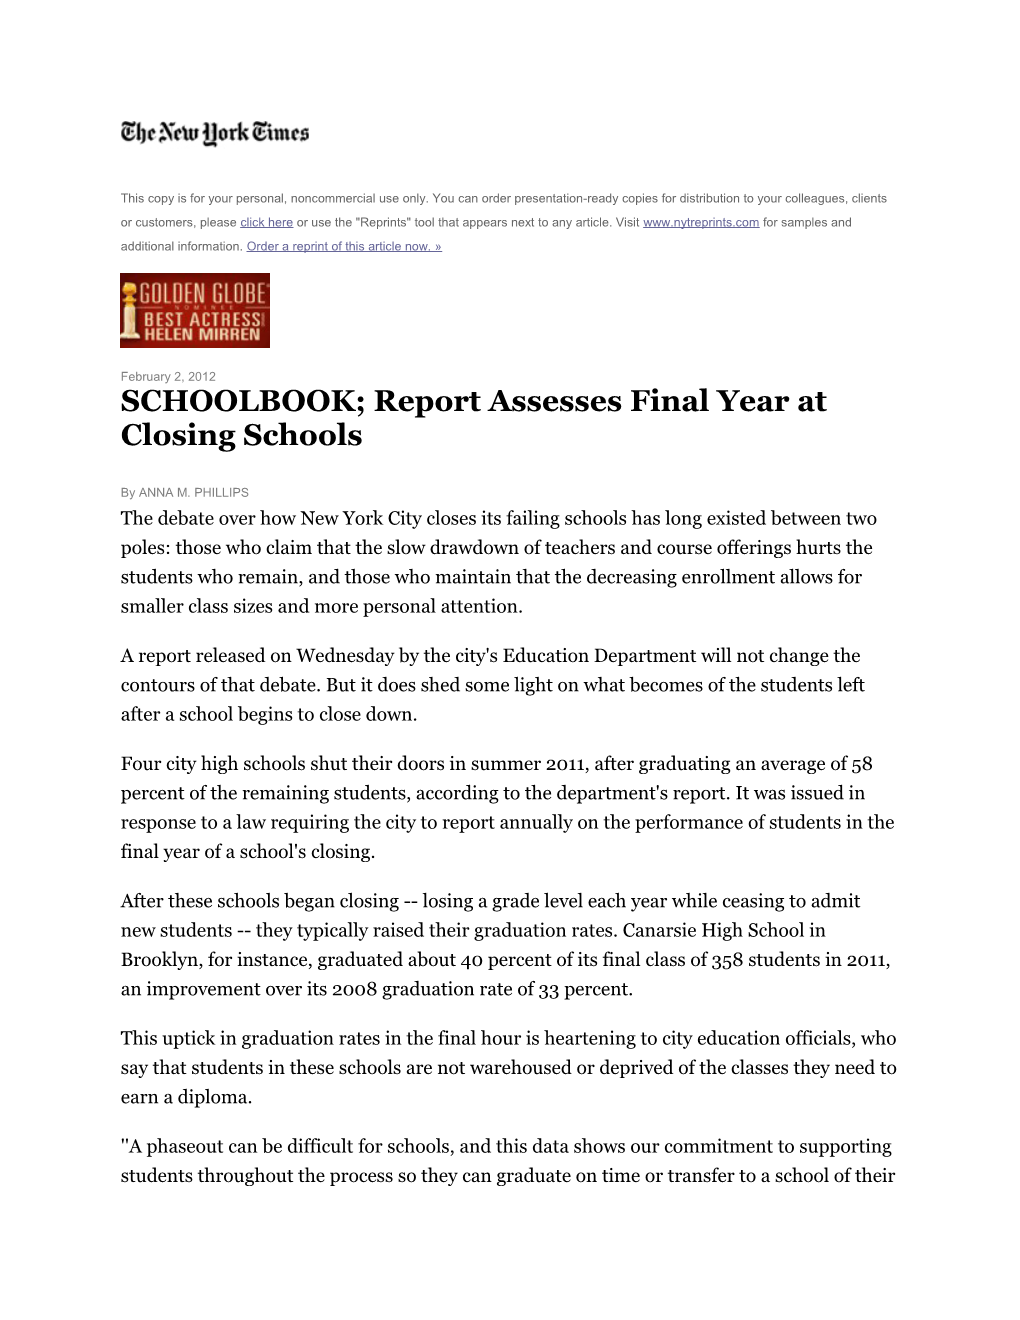 SCHOOLBOOK; Report Assesses Final Year at Closing Schools